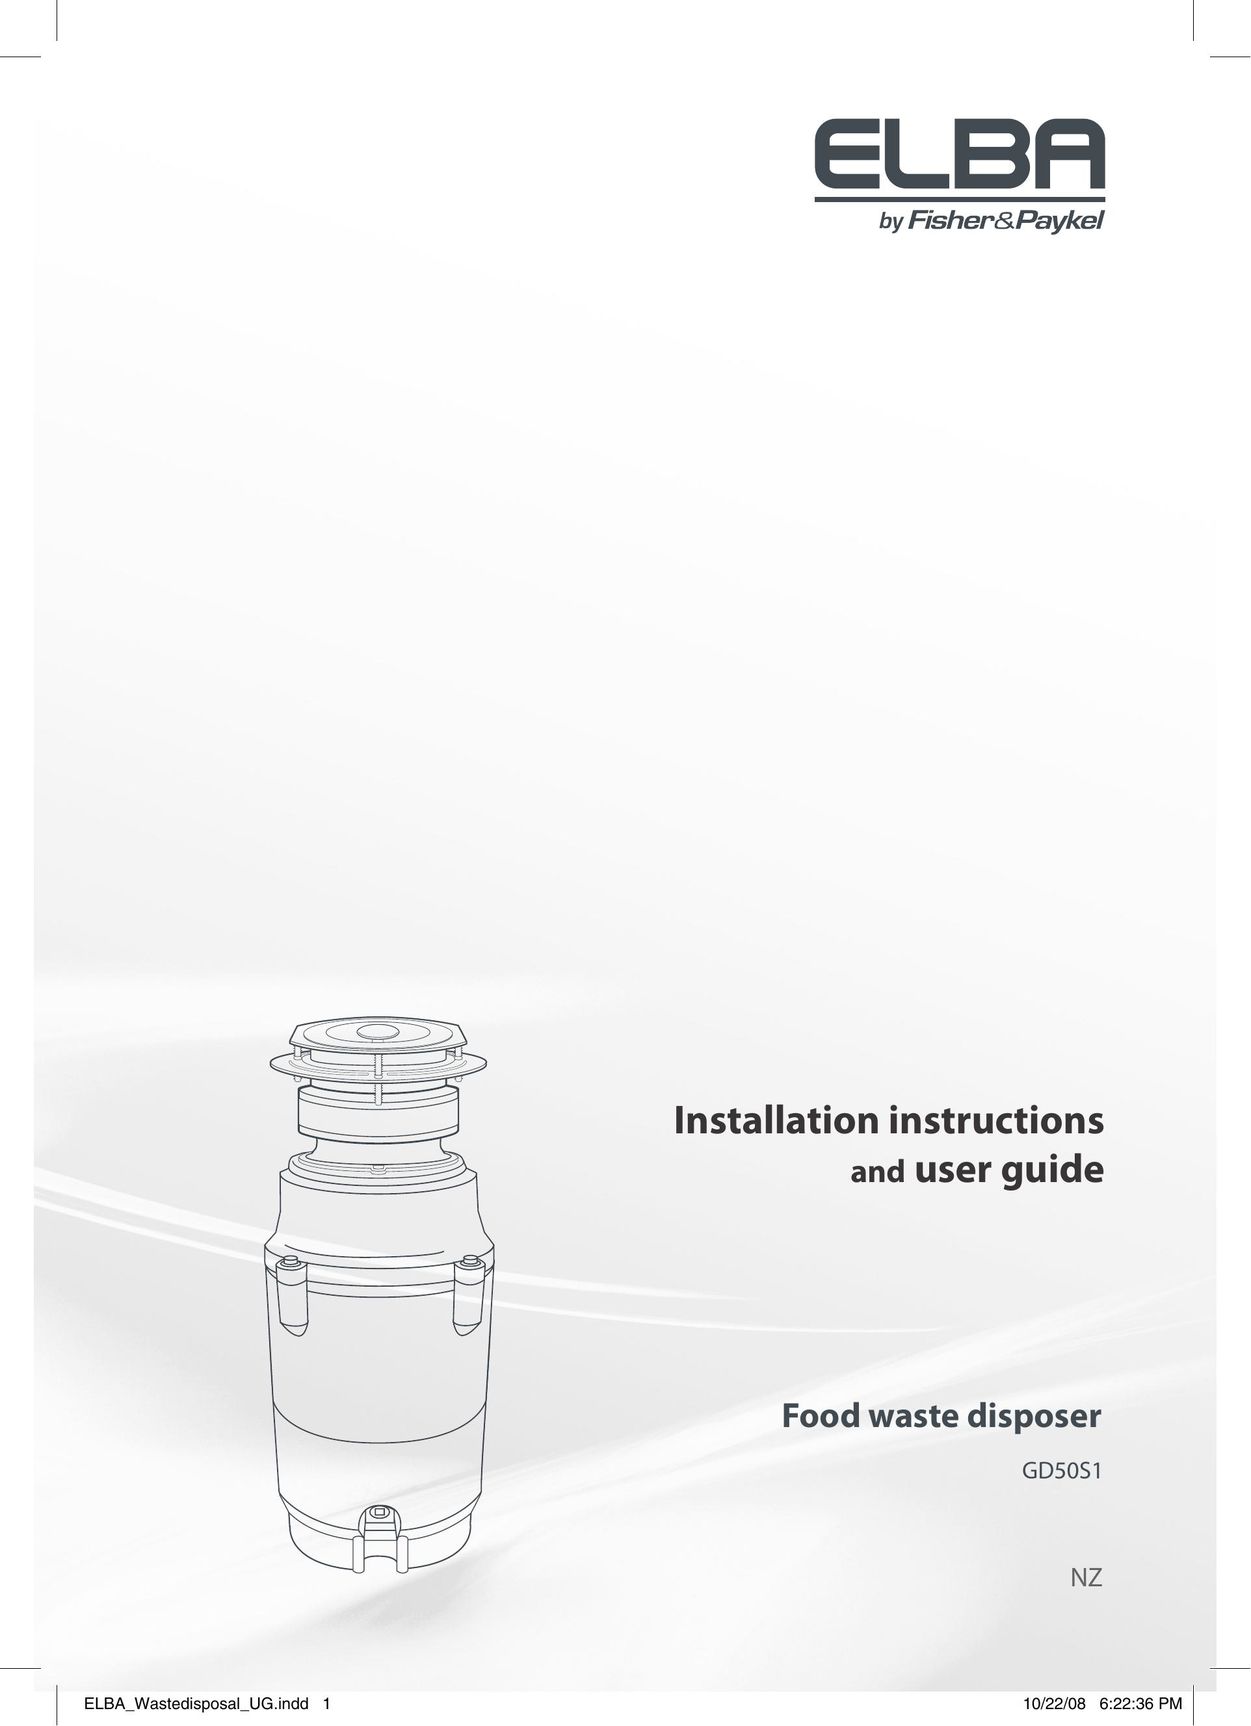 Fisher & Paykel GD50S1 Garbage Disposal User Manual